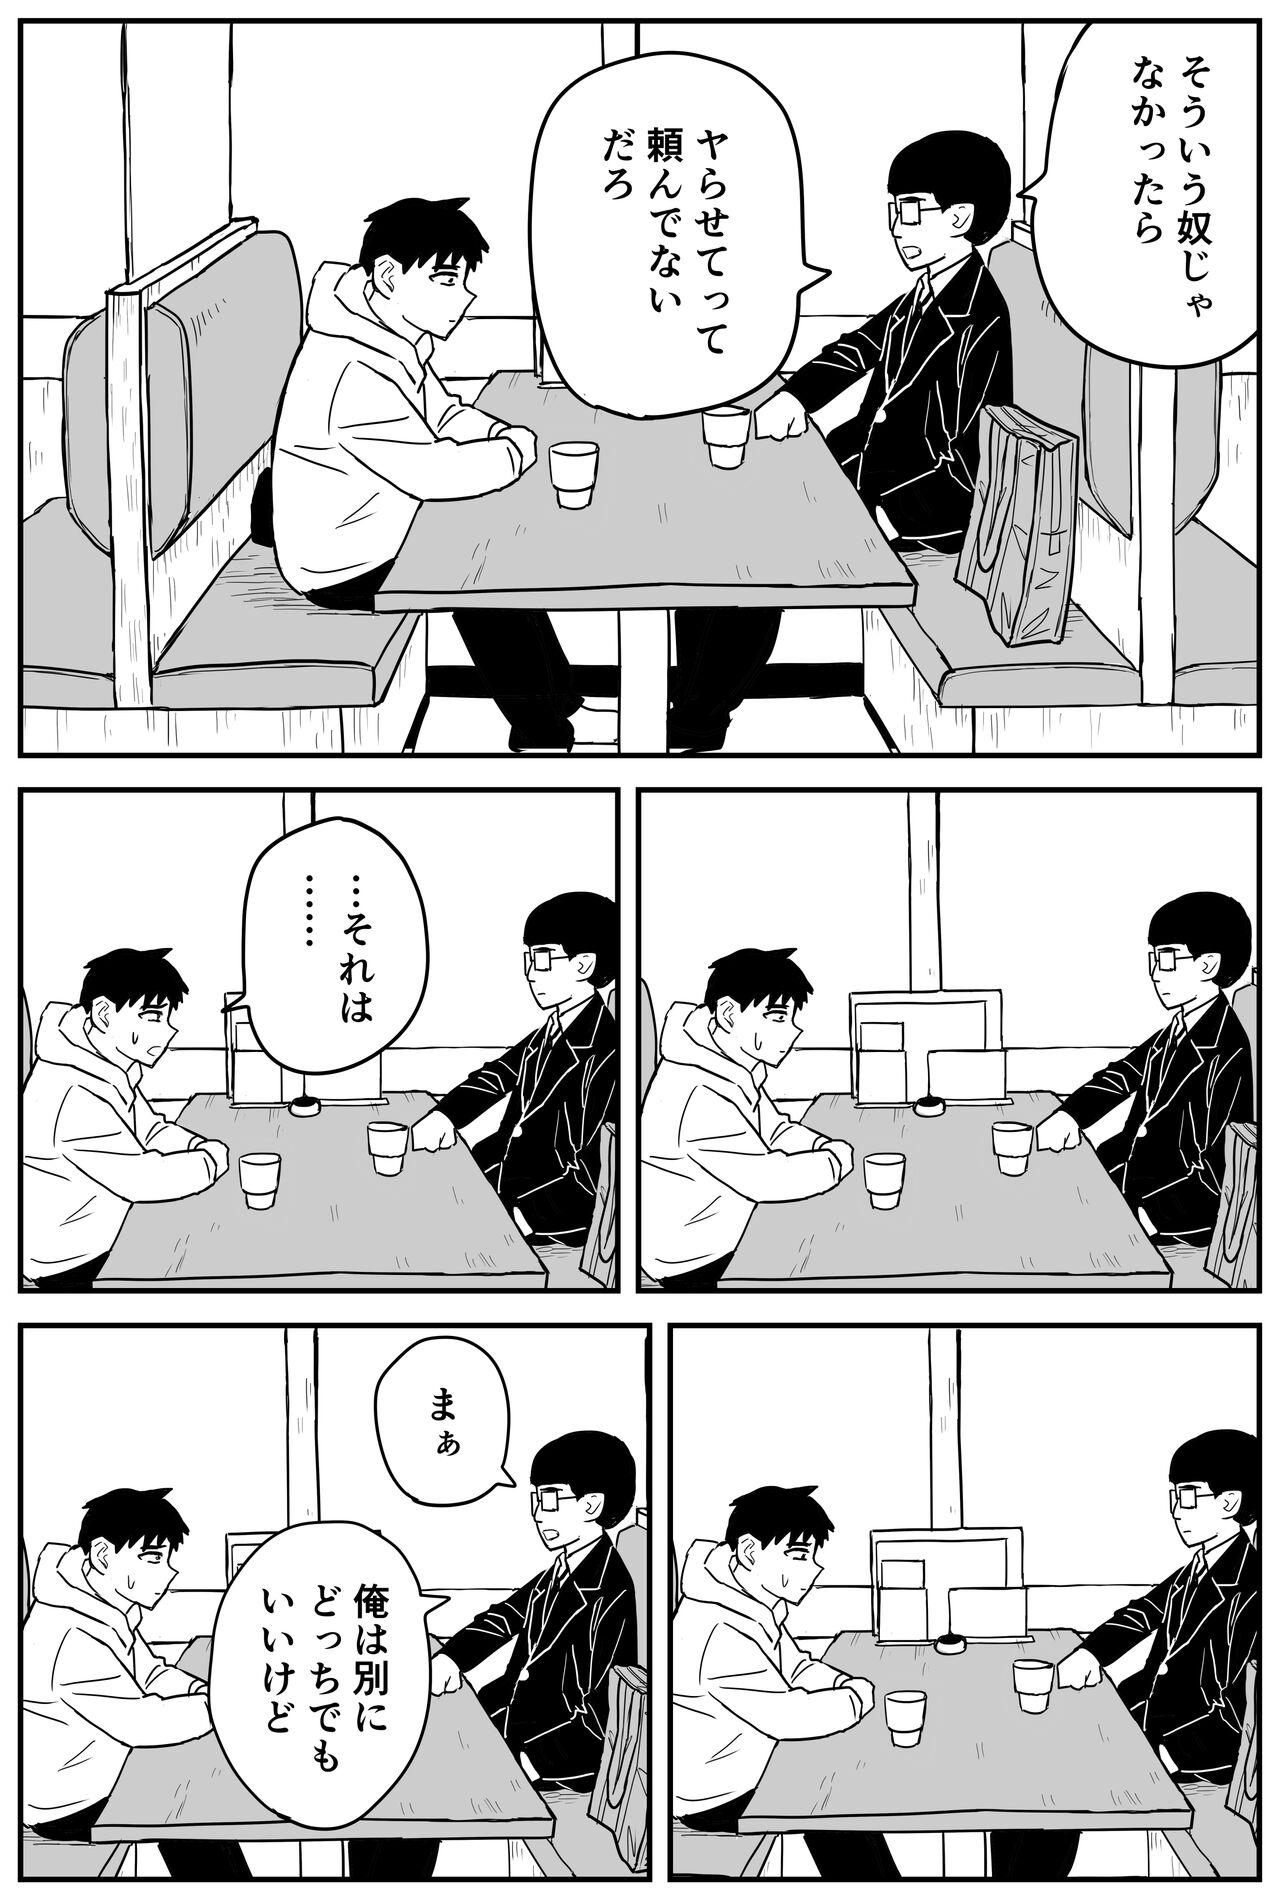 Gal JK Ero Manga Ch.1-27 250